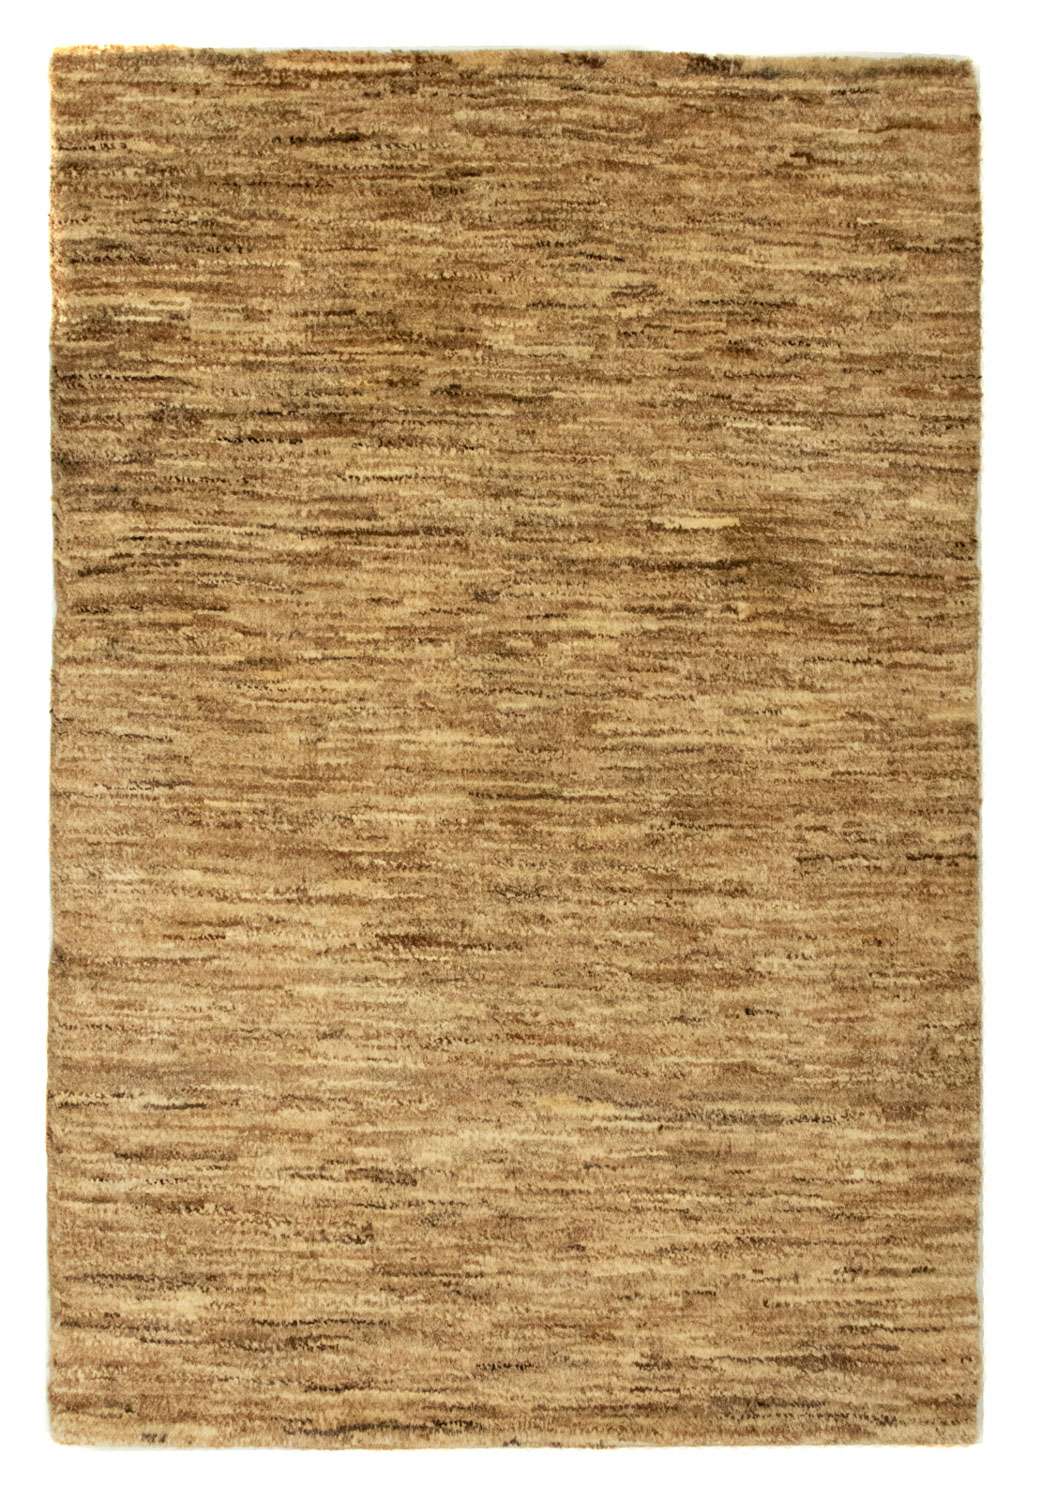 Gabbeh tapijt - Indus - 92 x 61 cm - beige